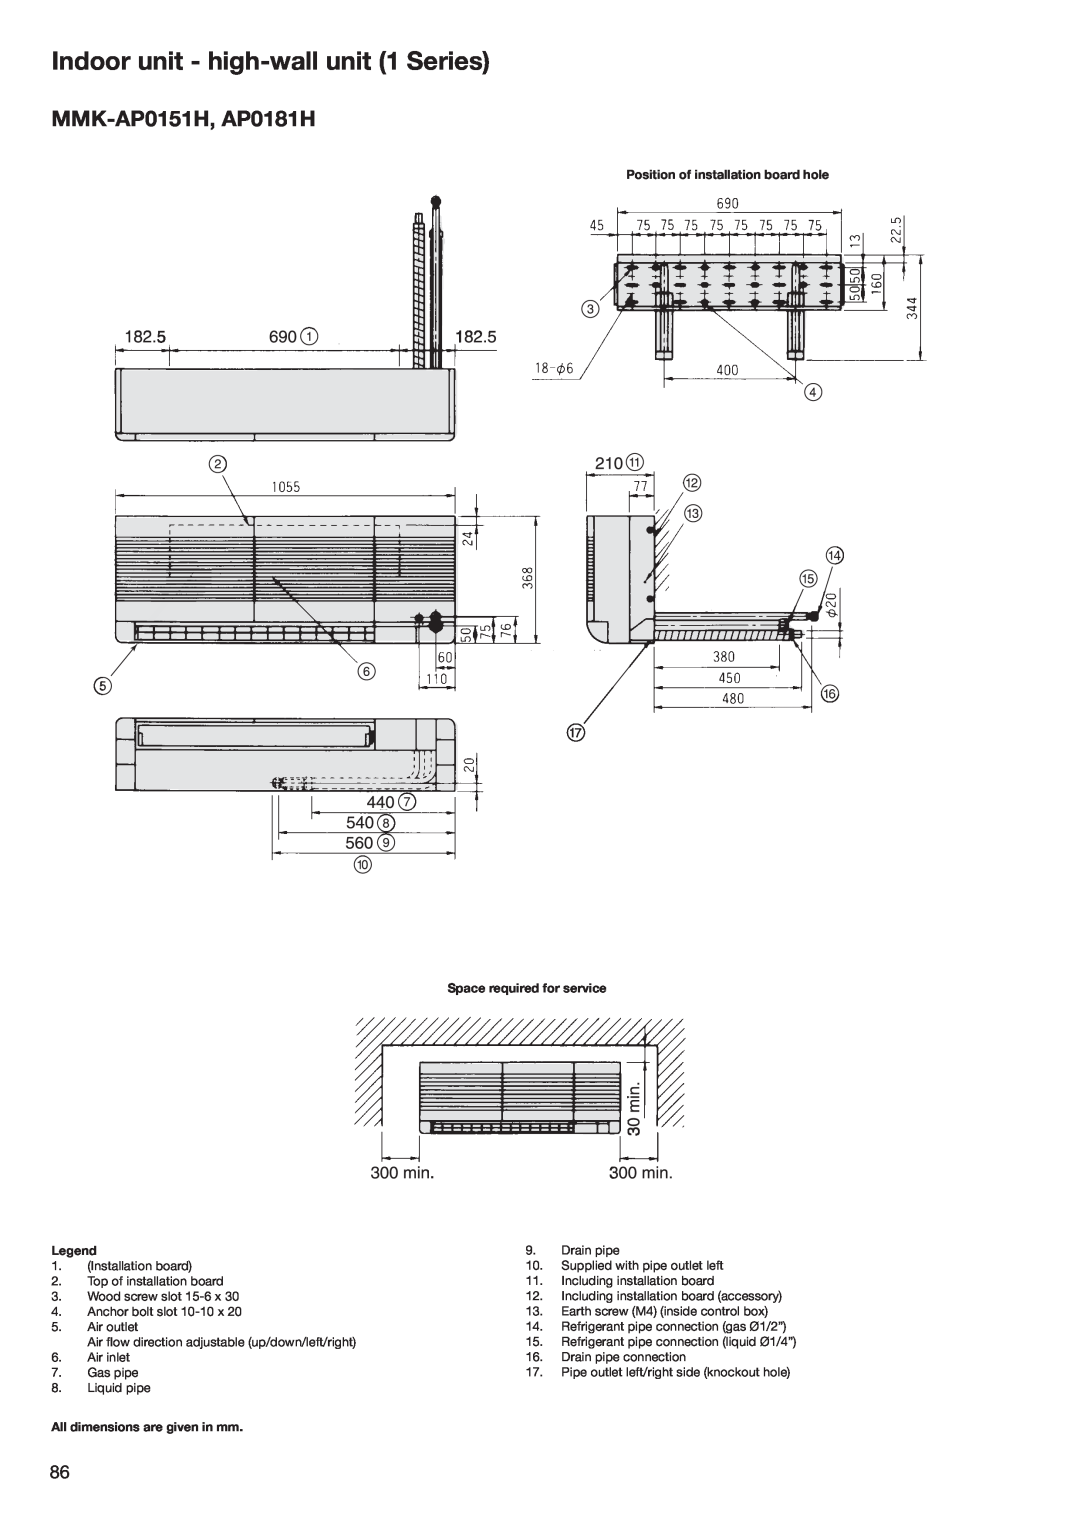 Toshiba HFC R-410A manual MMK-AP0151H,AP0181H, Indoor unit - high-wallunit 1 Series 